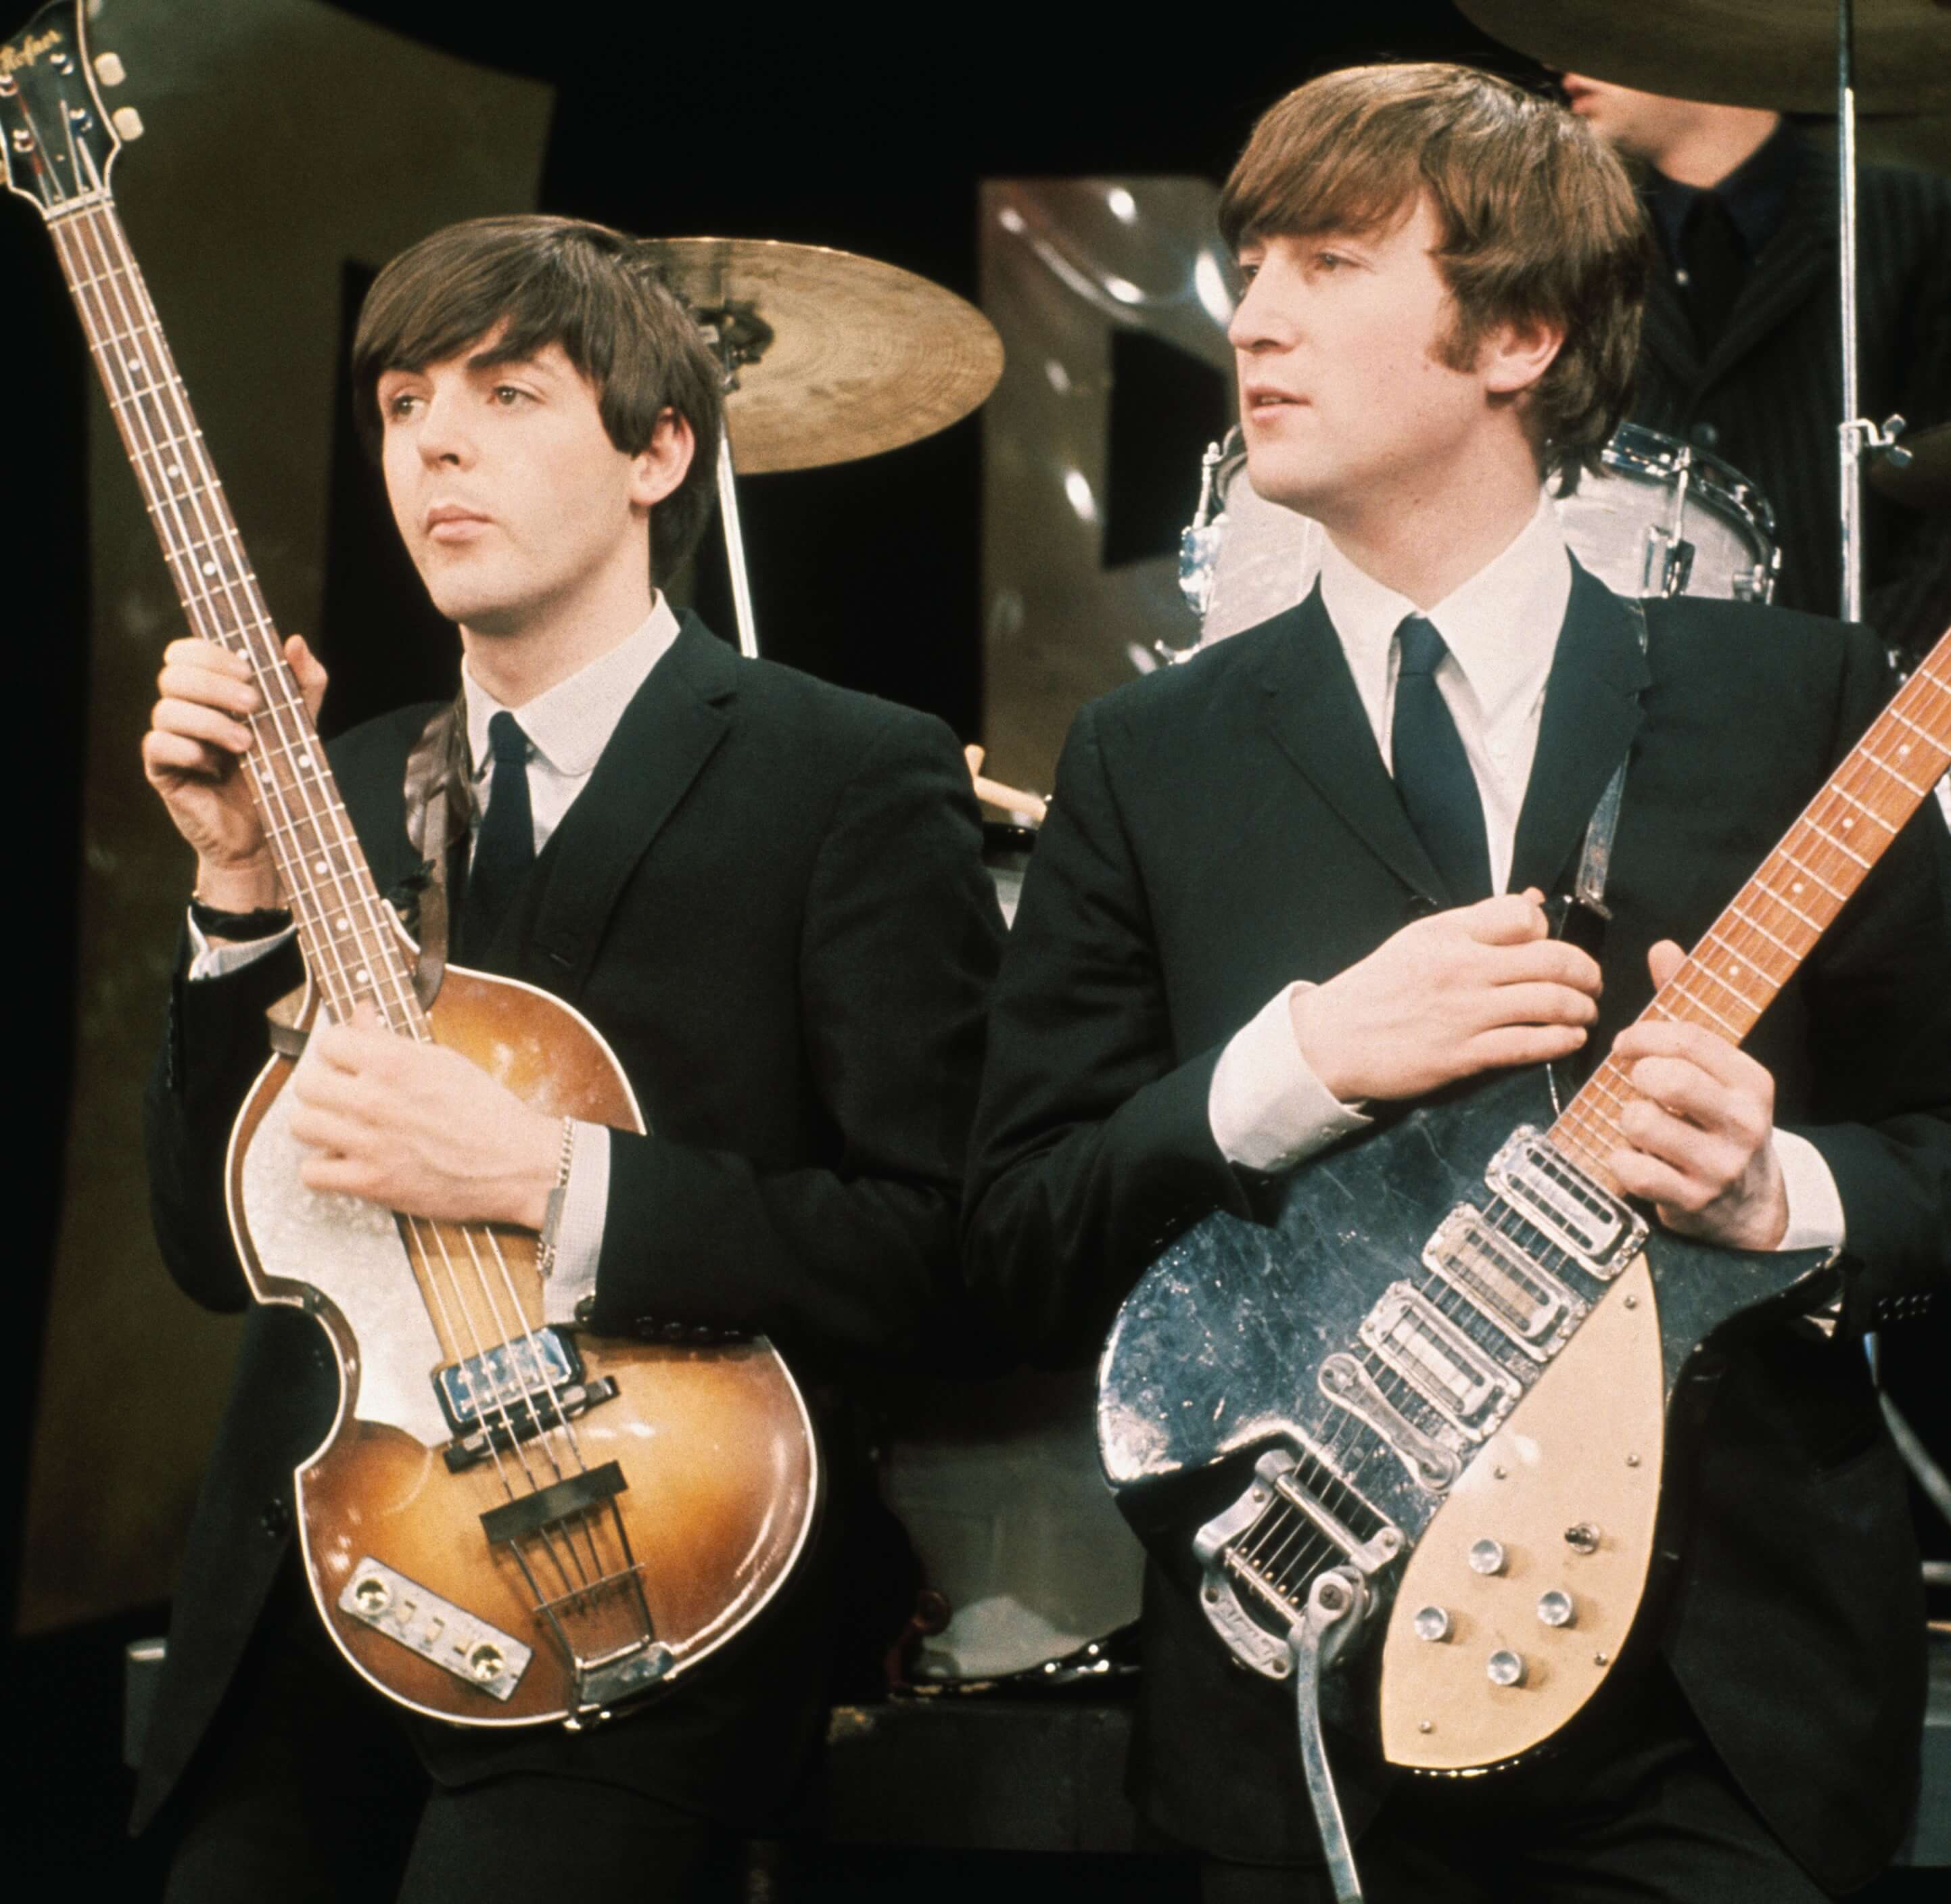 The Beatles' Paul McCartney and John Lennon with guitars